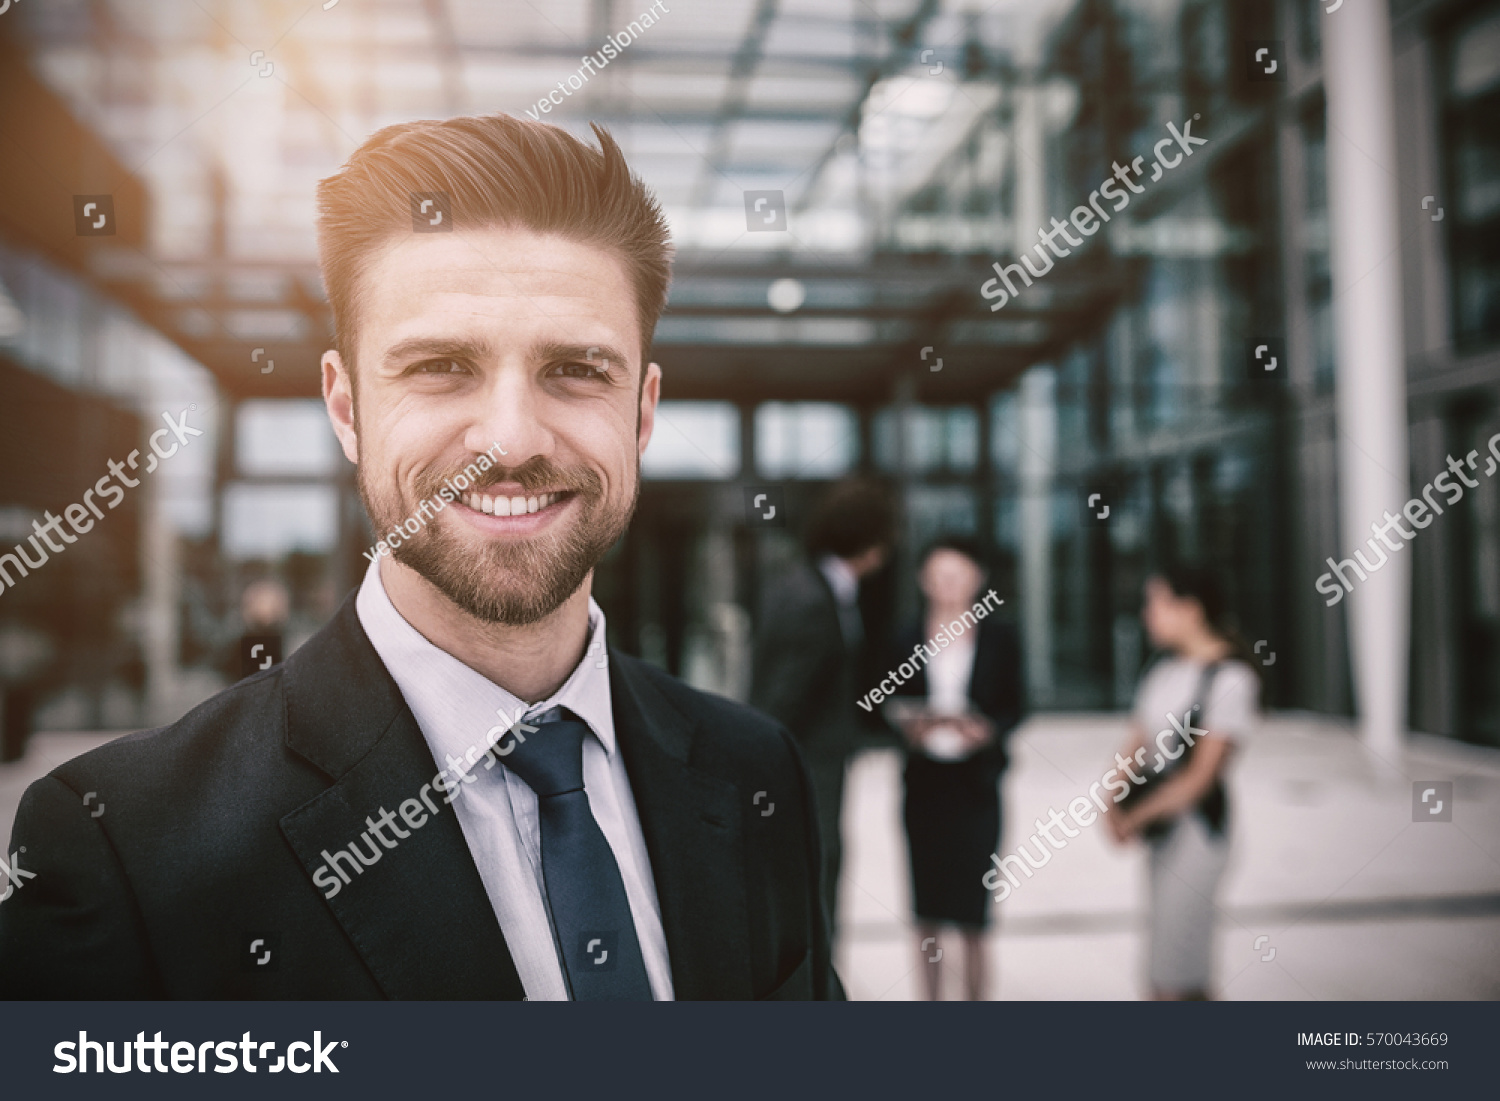 Portrait of happy businessman in office premises #570043669